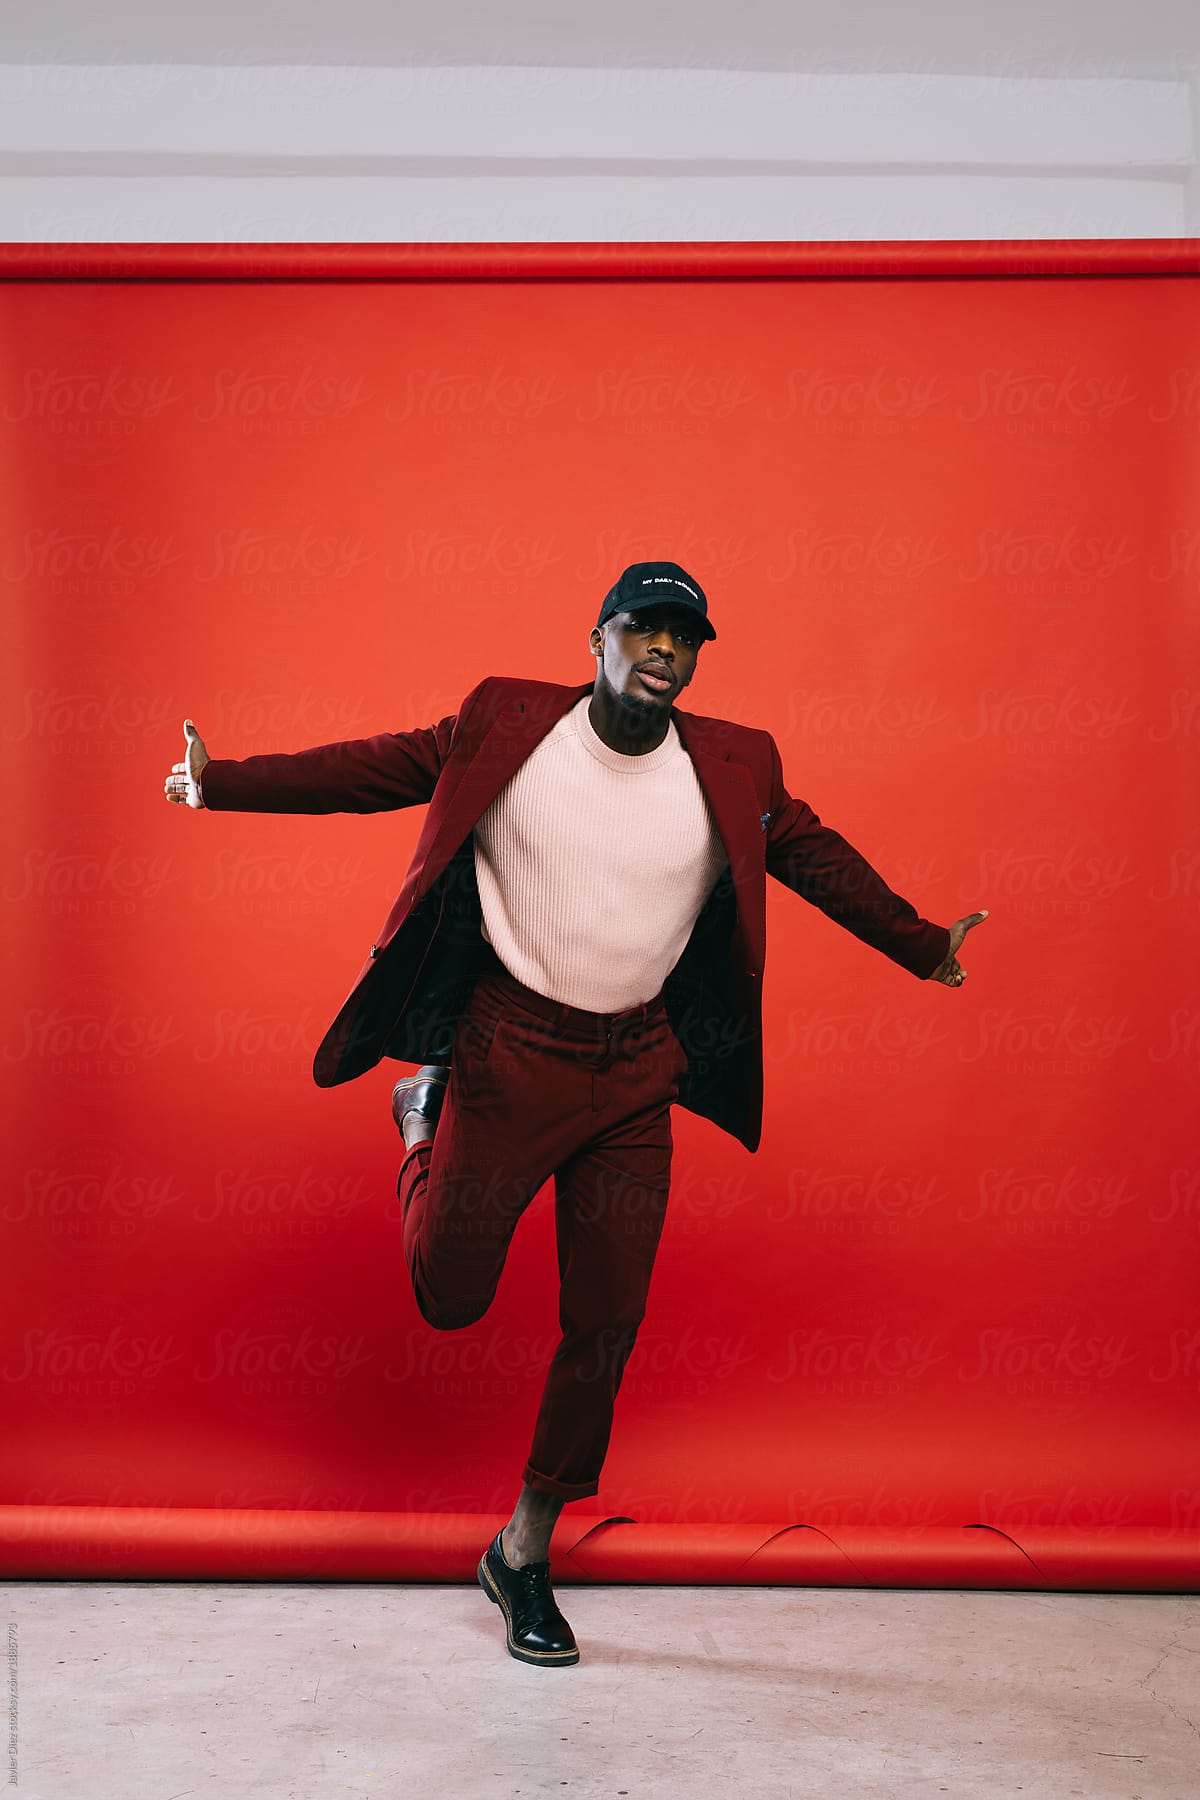 Black man in suit dancing